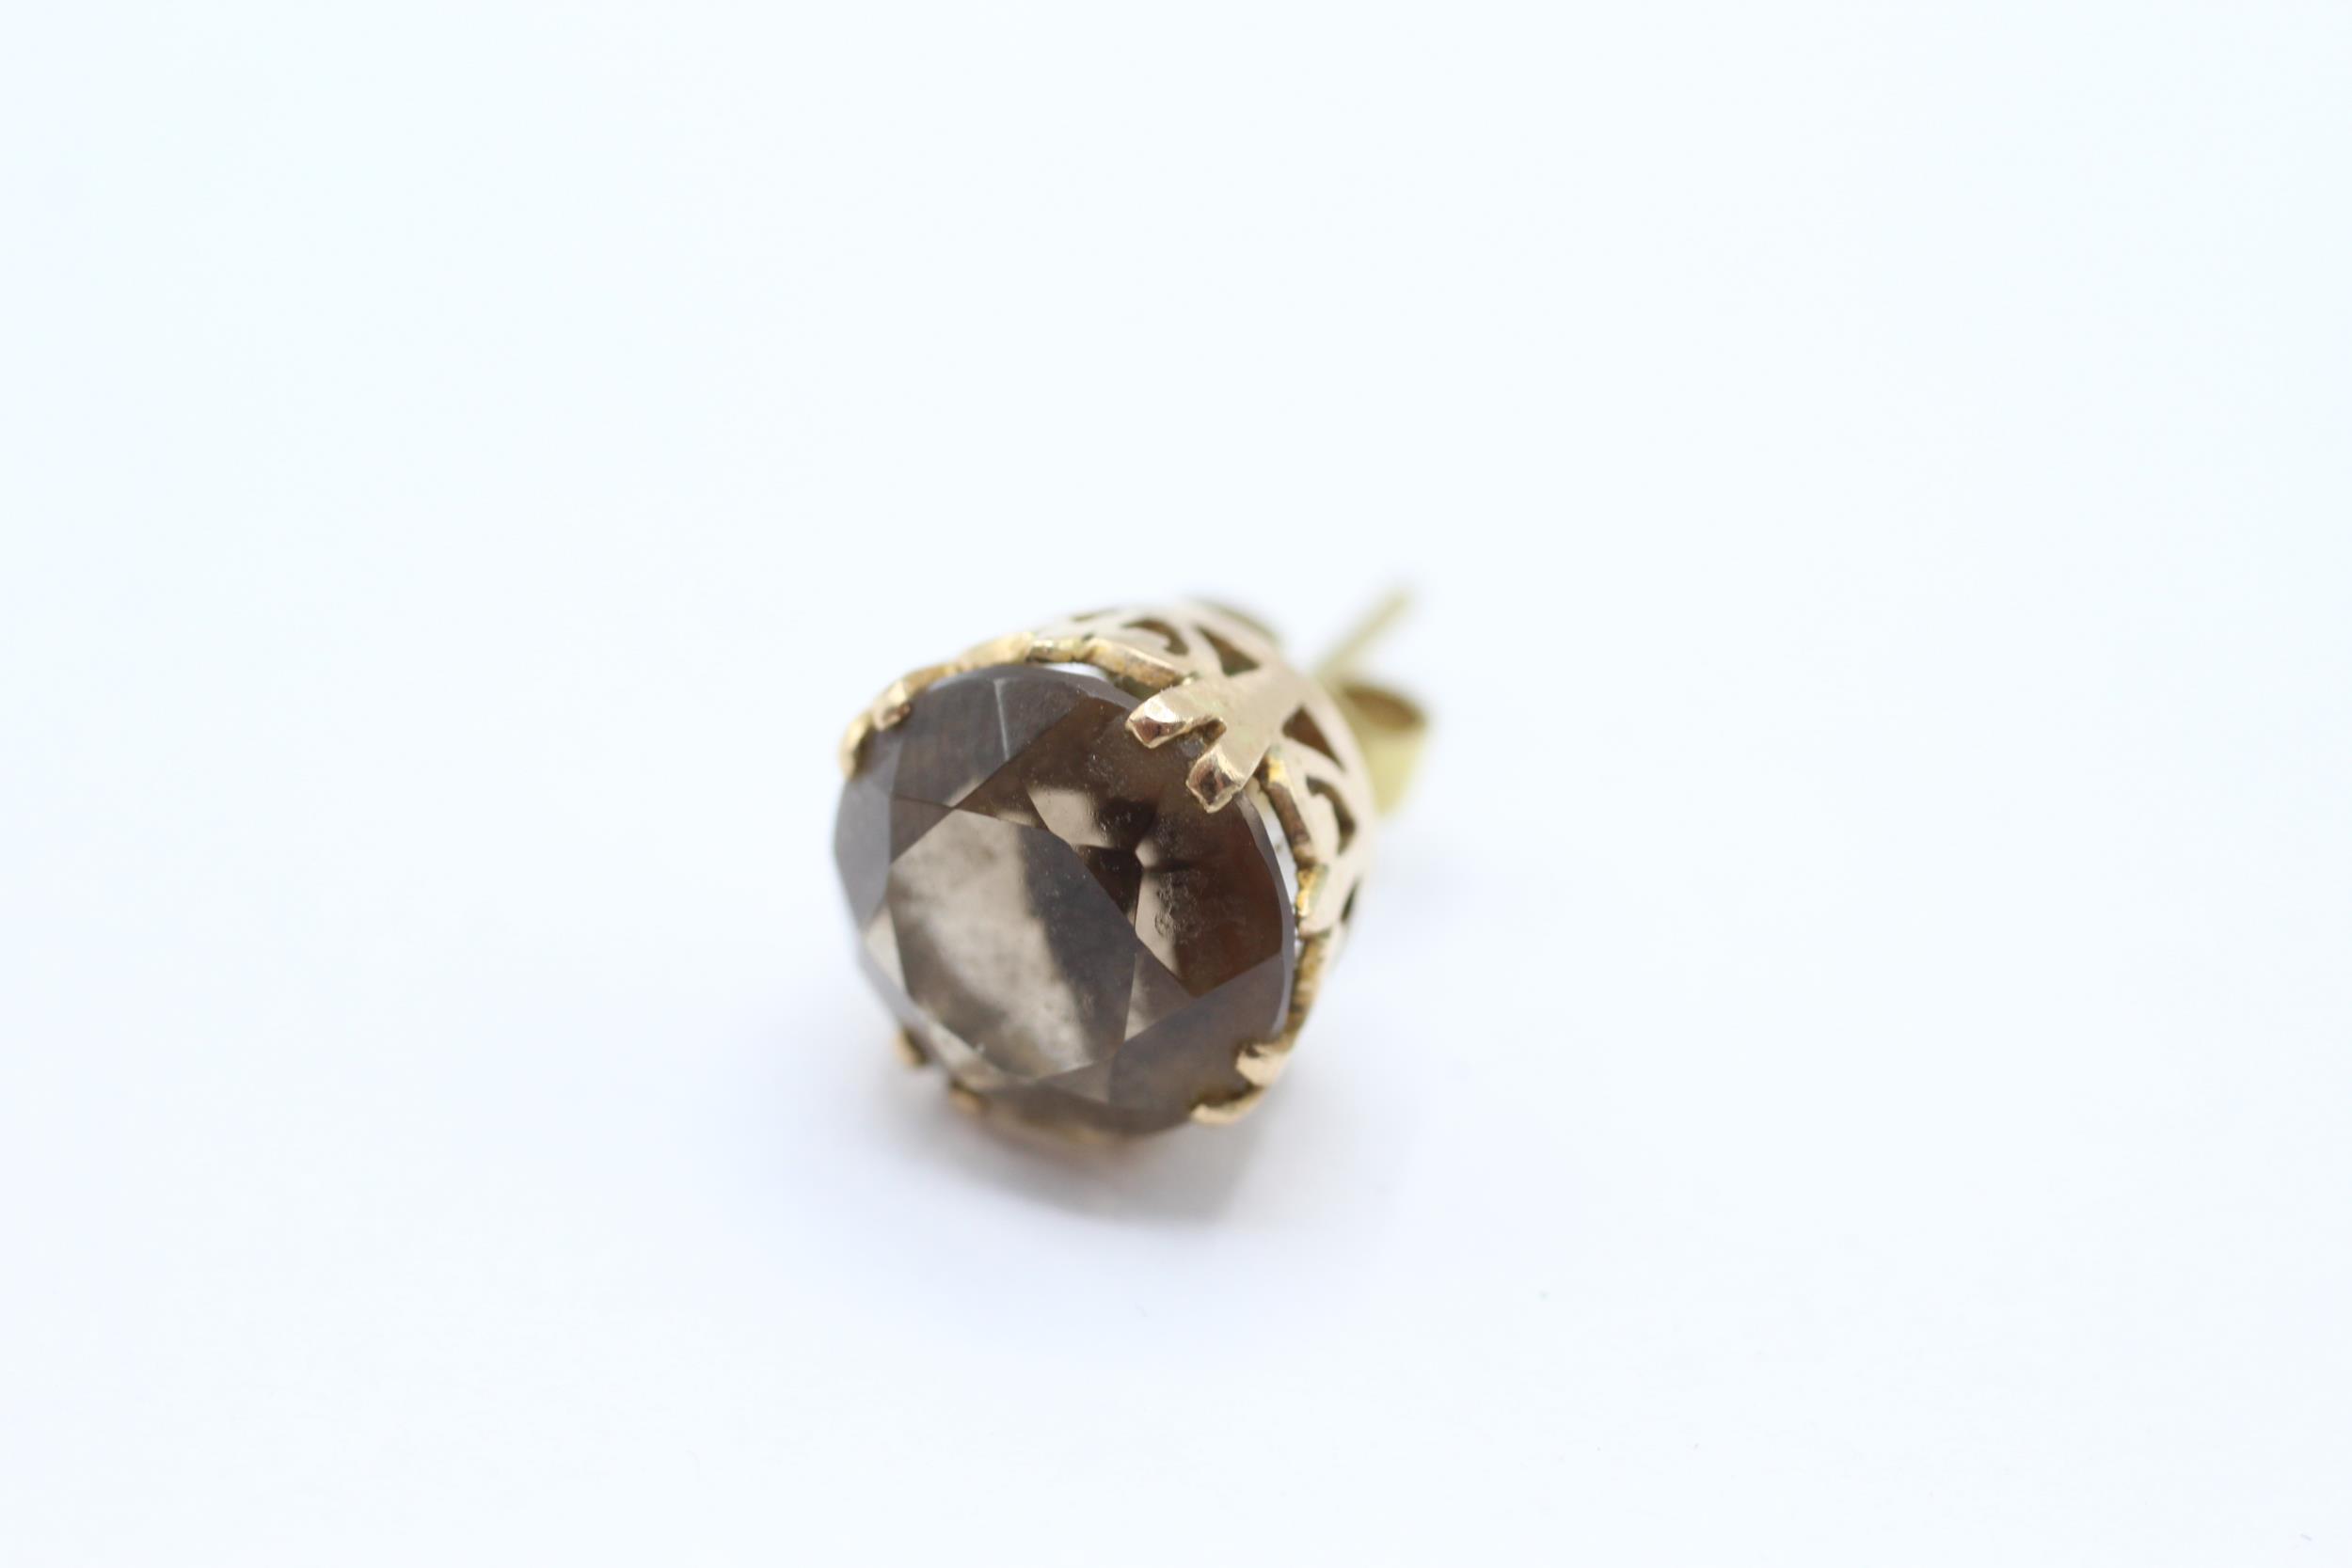 9ct gold smokey quartz stud earrings - 3.6 g - Image 4 of 4